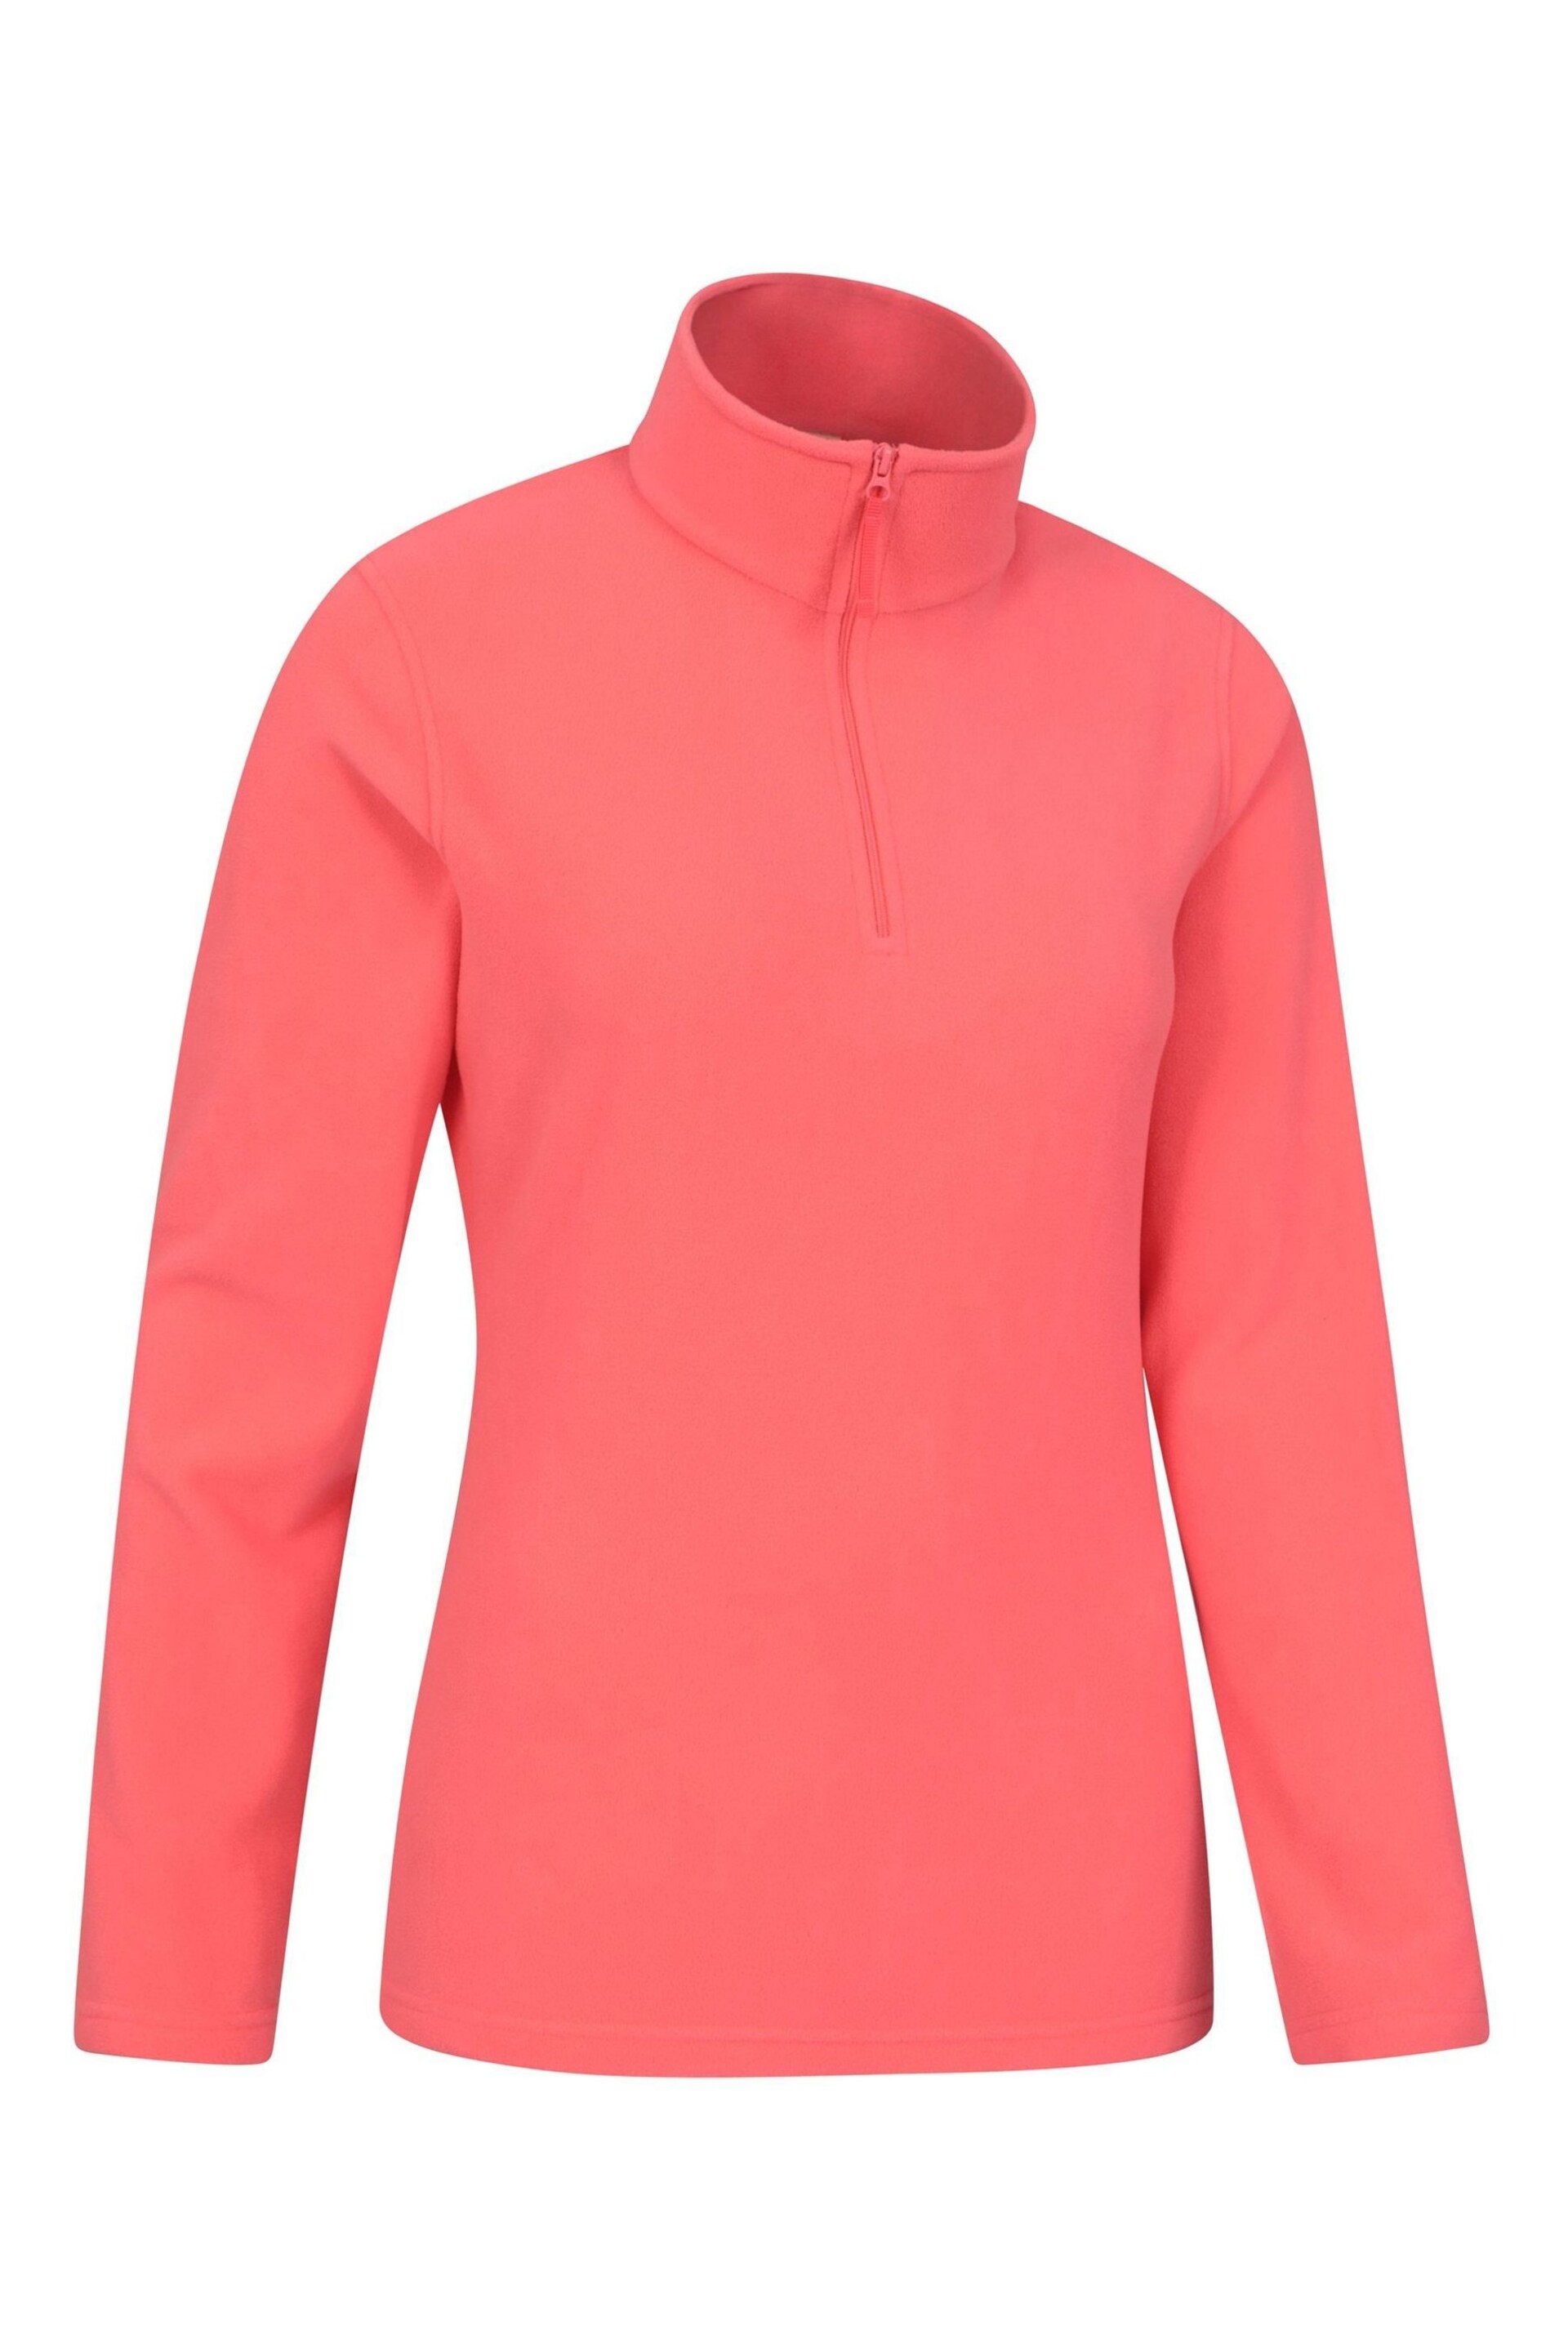 Mountain Warehouse Pink Womens Camber II Half Zip Fleece - Image 2 of 5